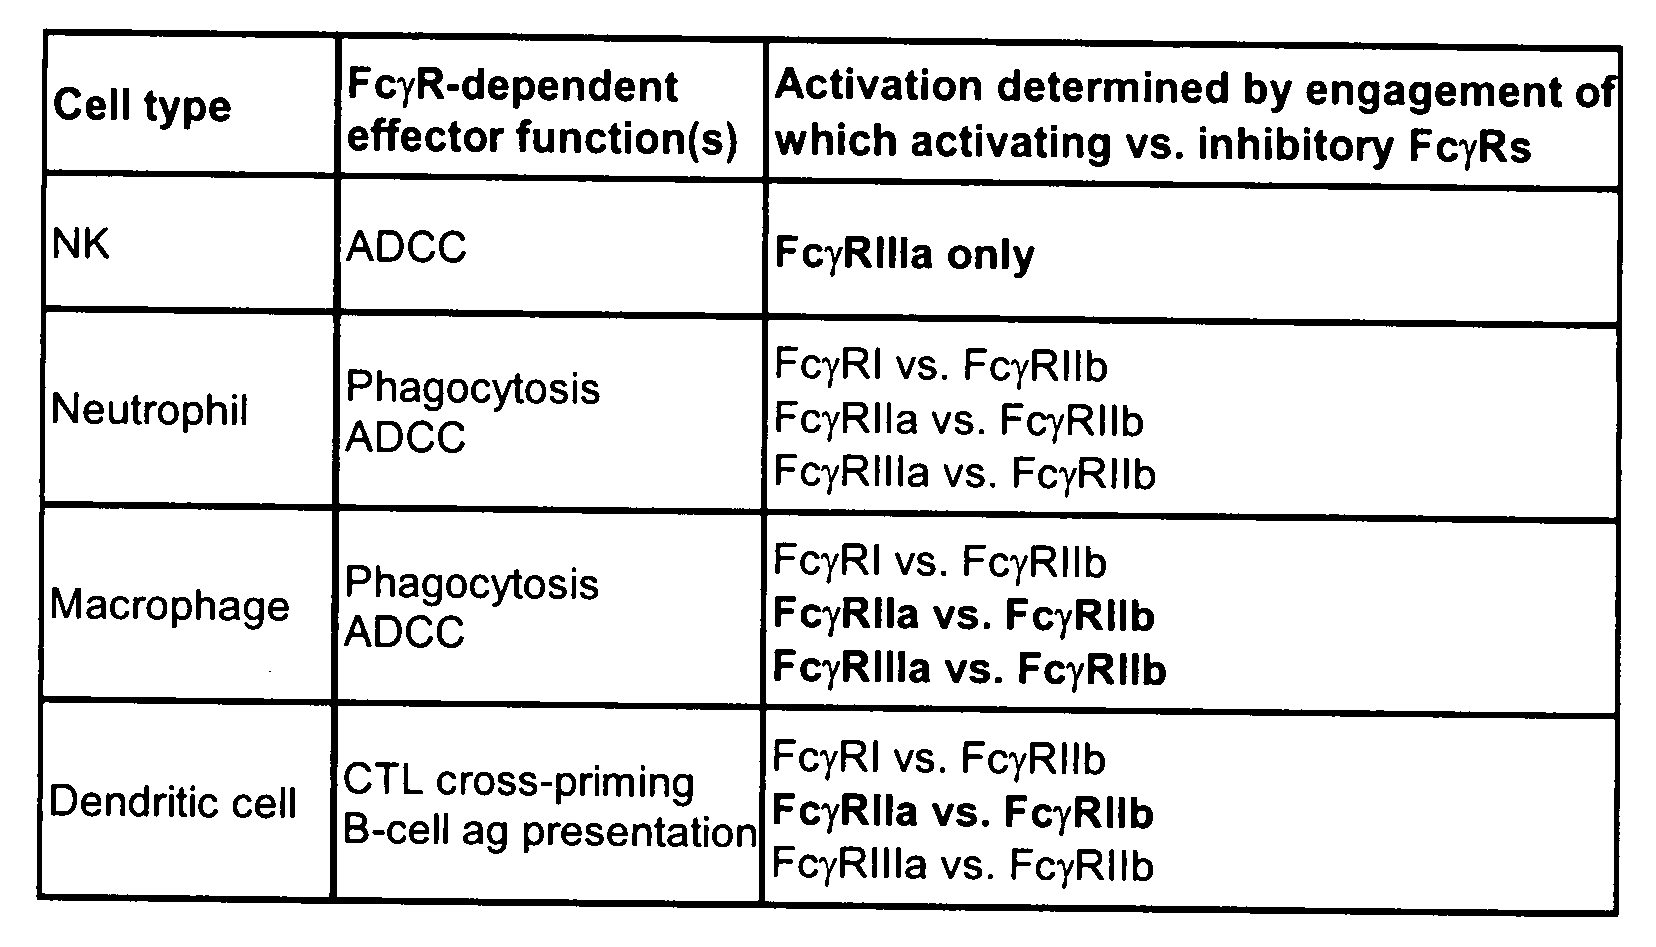 Fc variants with optimized Fc receptor binding properties